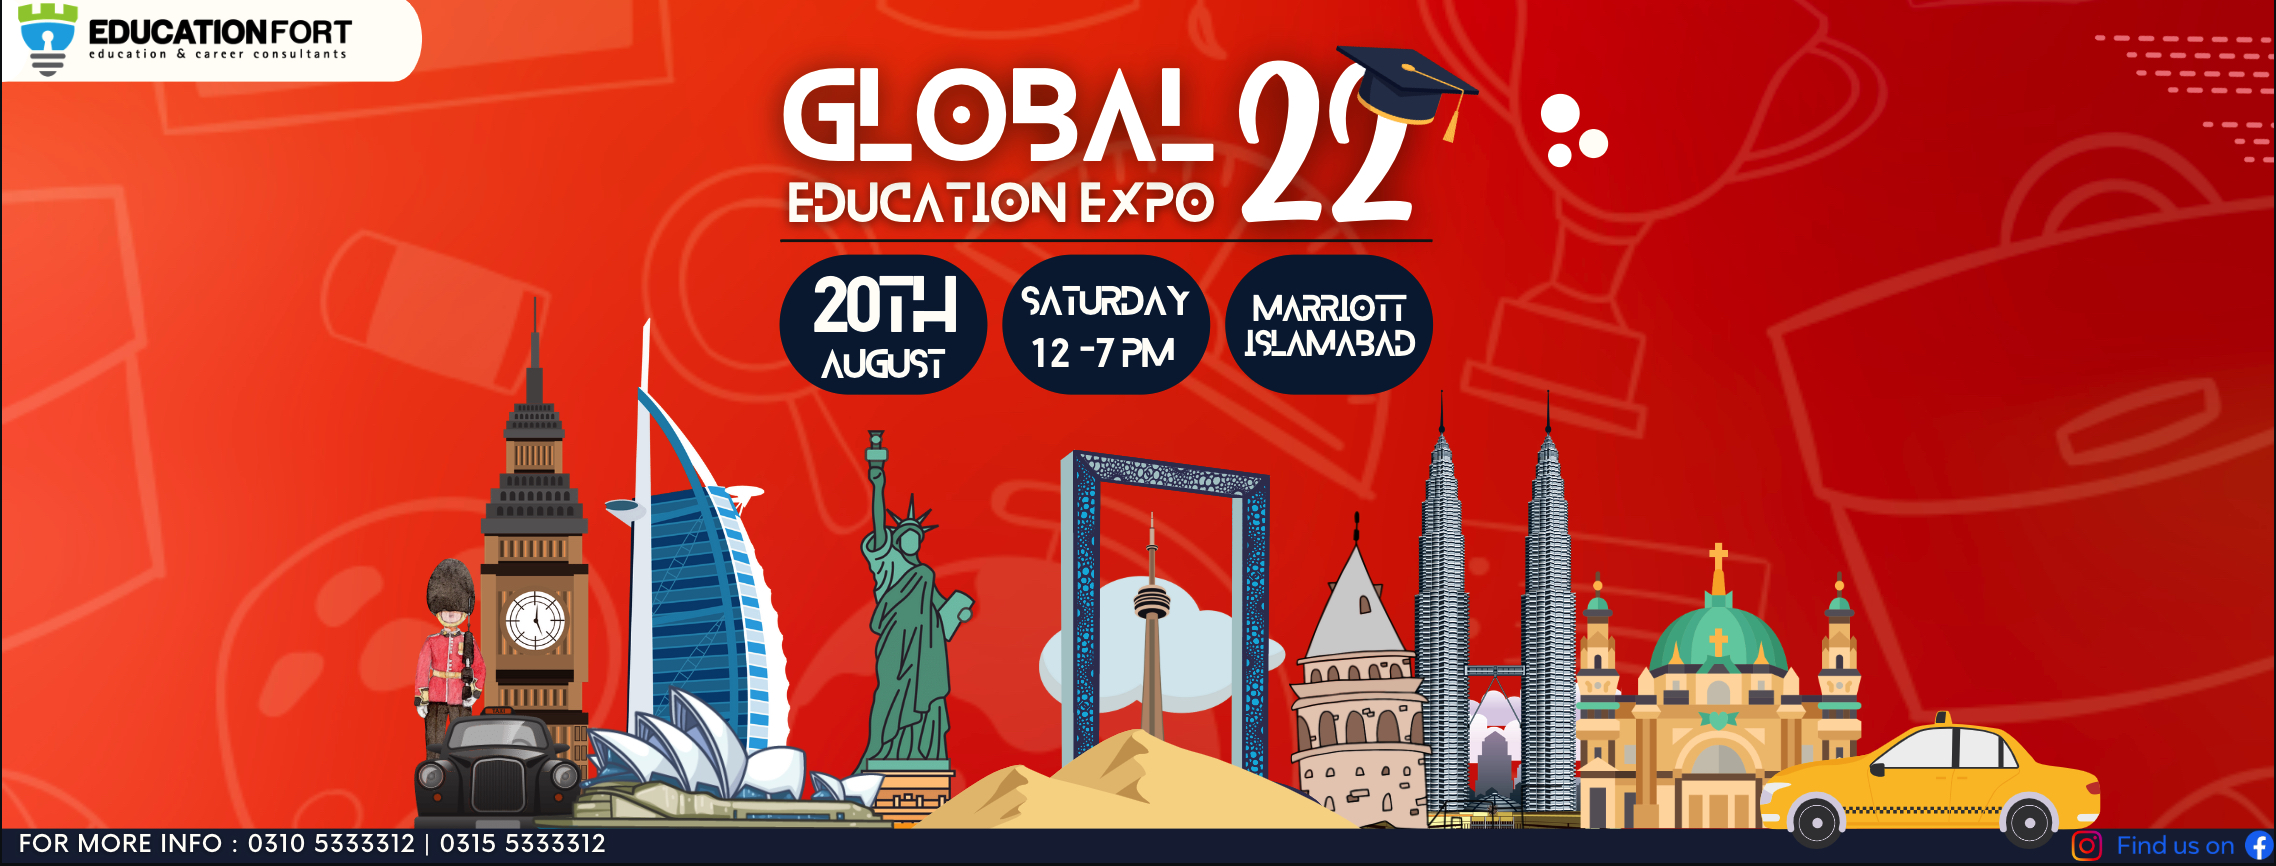 Global Education Expo 22